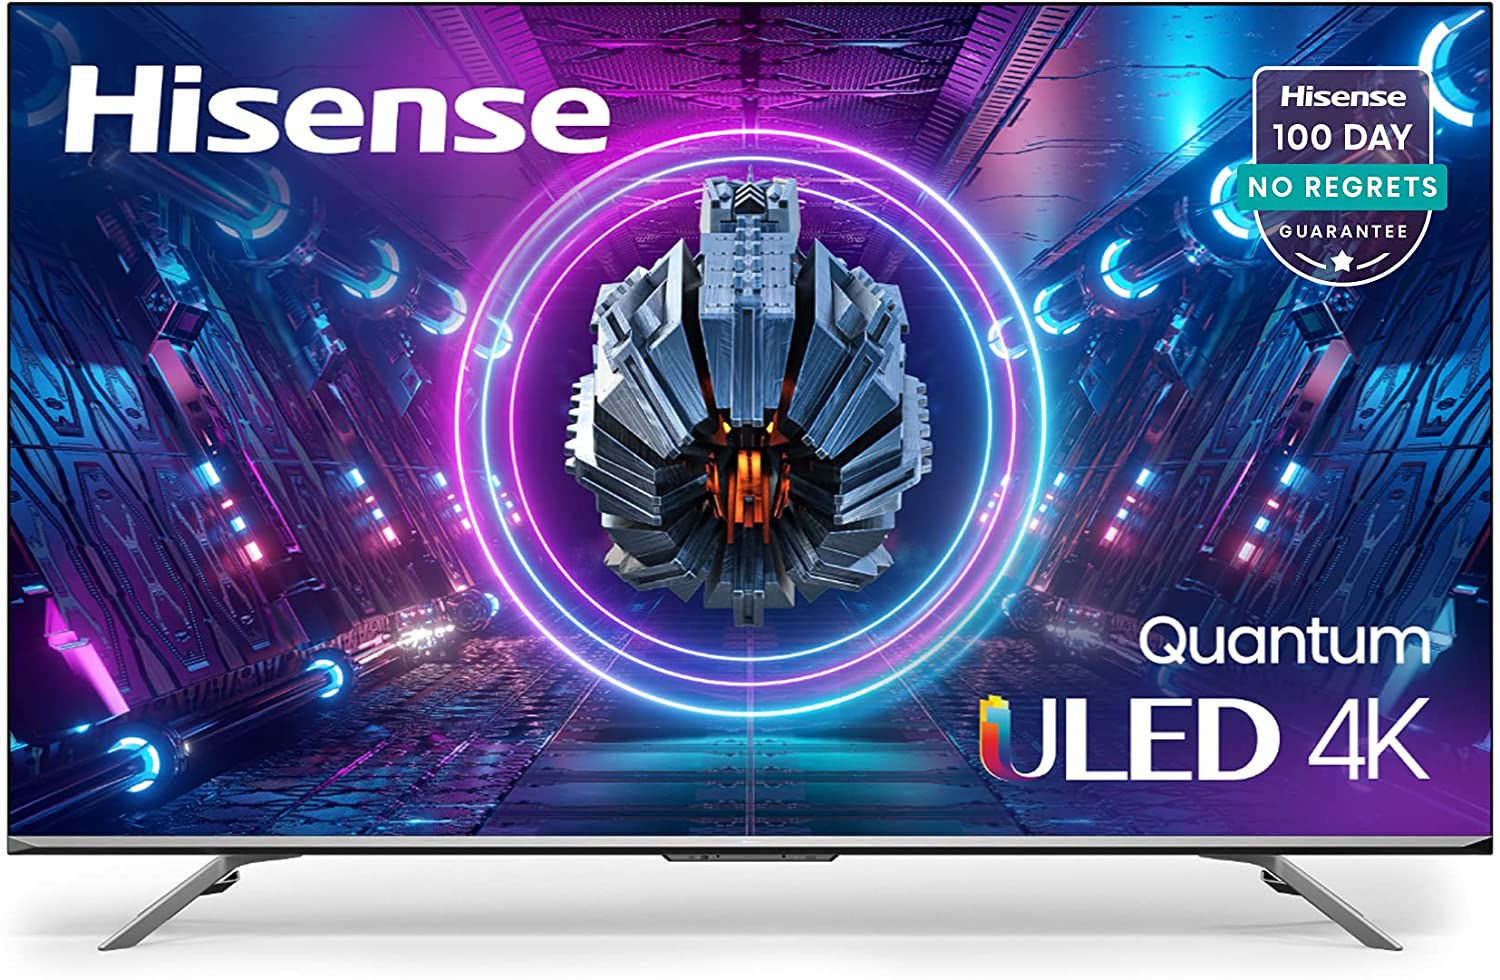 Hisense ULED Premium 75-Inch U7G Quantum Dot QLED Series Android 4K Smart TV with Alexa Compatibility (75U7G) $1140